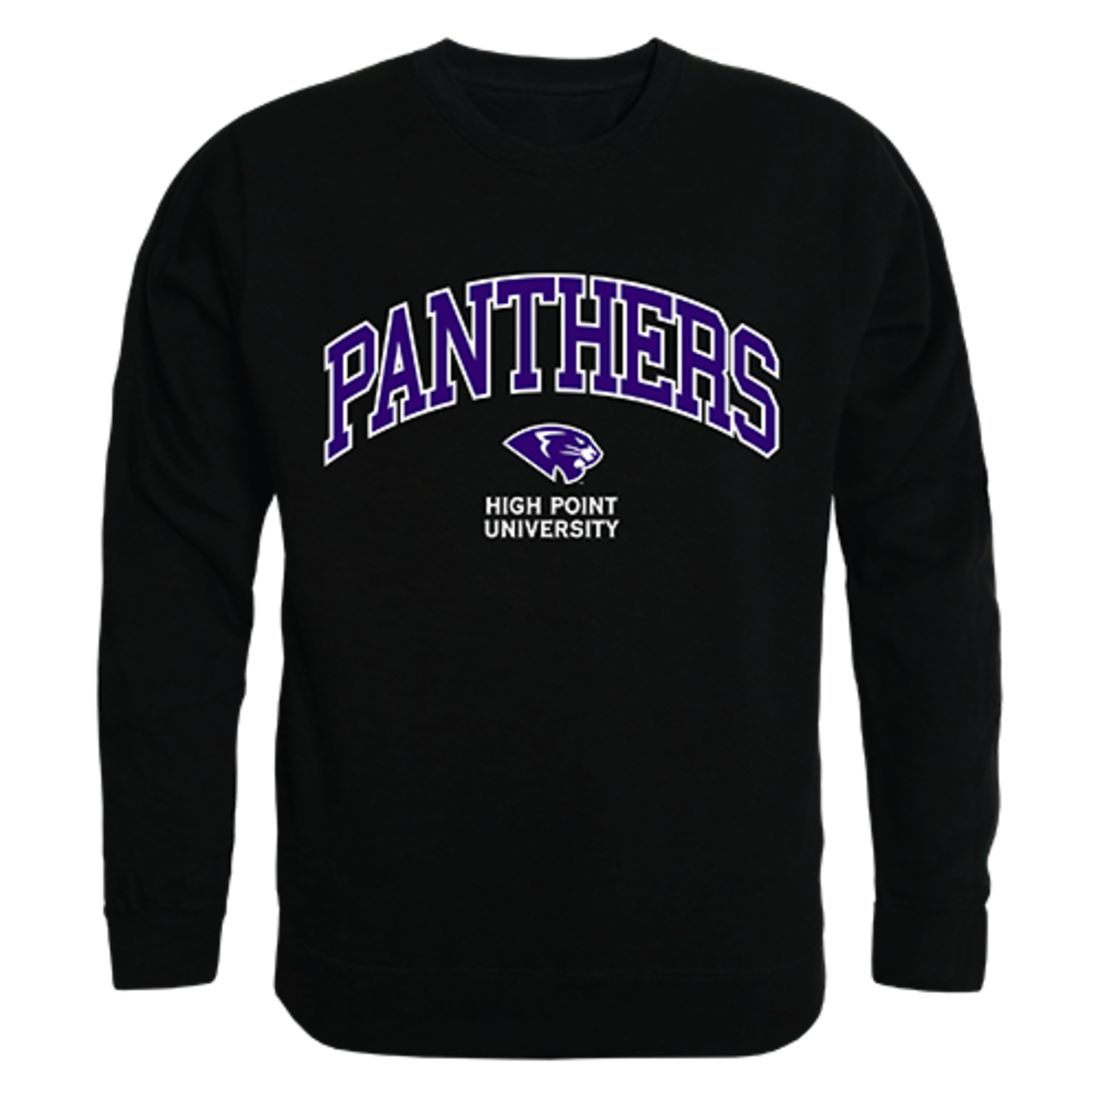 HPU High Point University Campus Crewneck Pullover Sweatshirt Sweater Black-Campus-Wardrobe